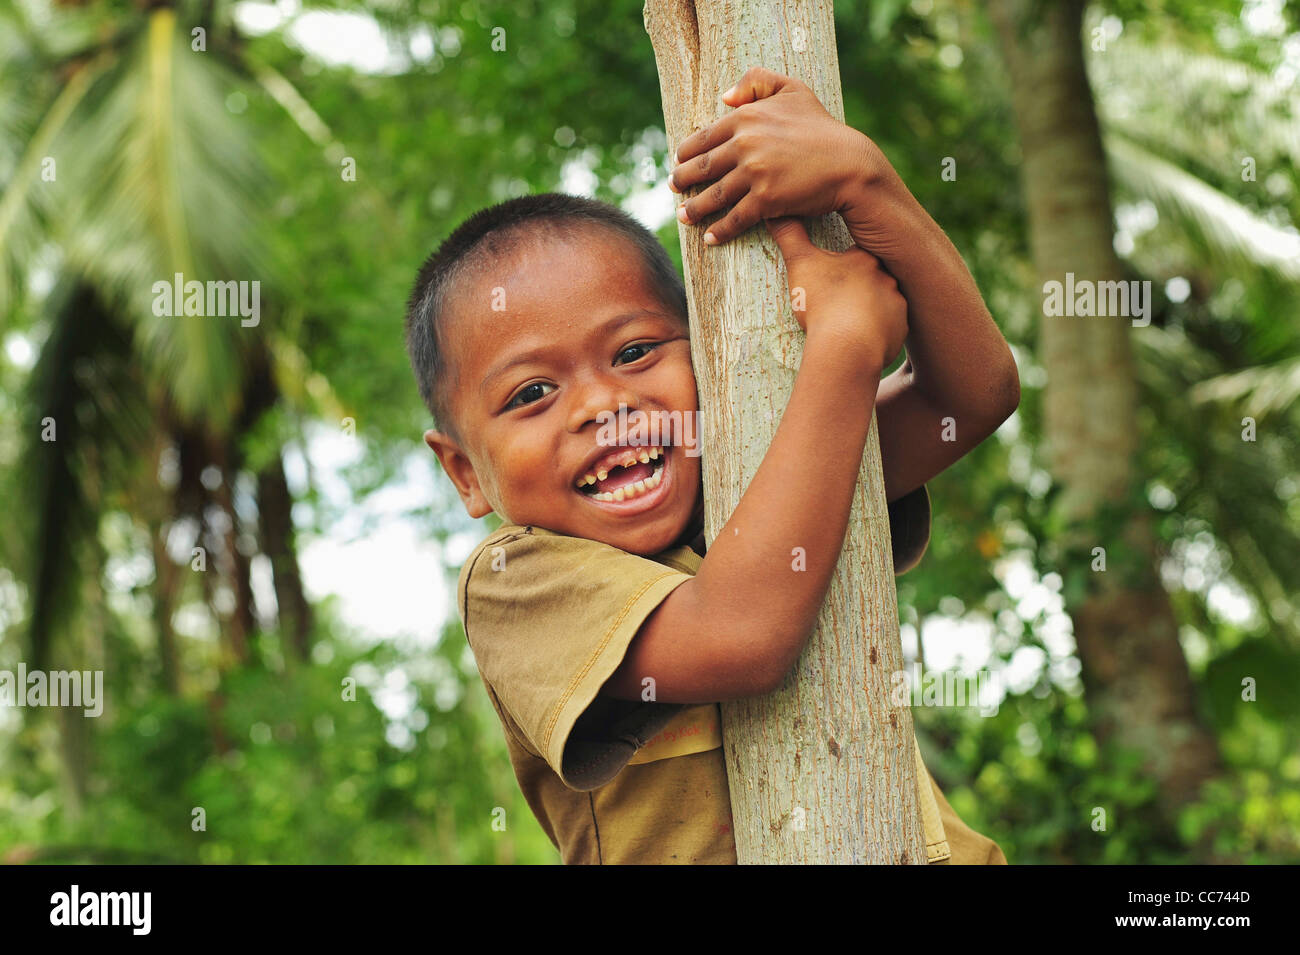 Indonesia, Sumatra, Banda Aceh, young smiling boy climbing tree Stock Photo